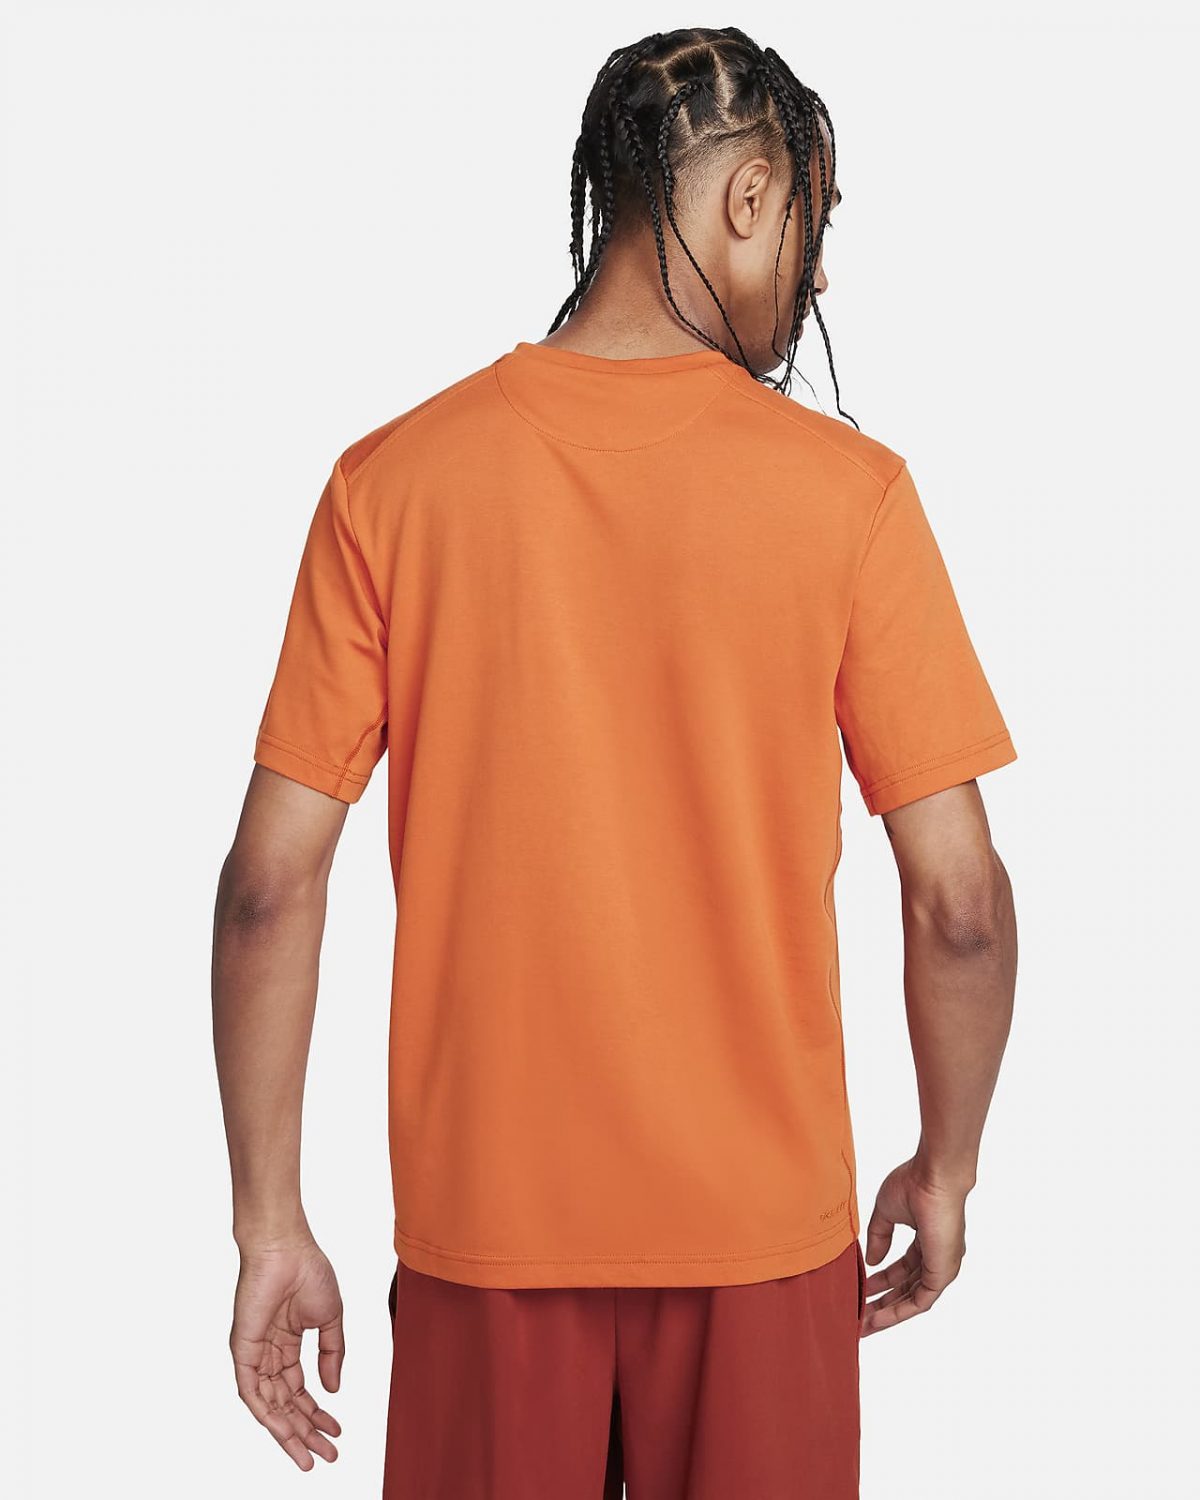 Мужская футболка Nike Dri-FIT Primary фотография